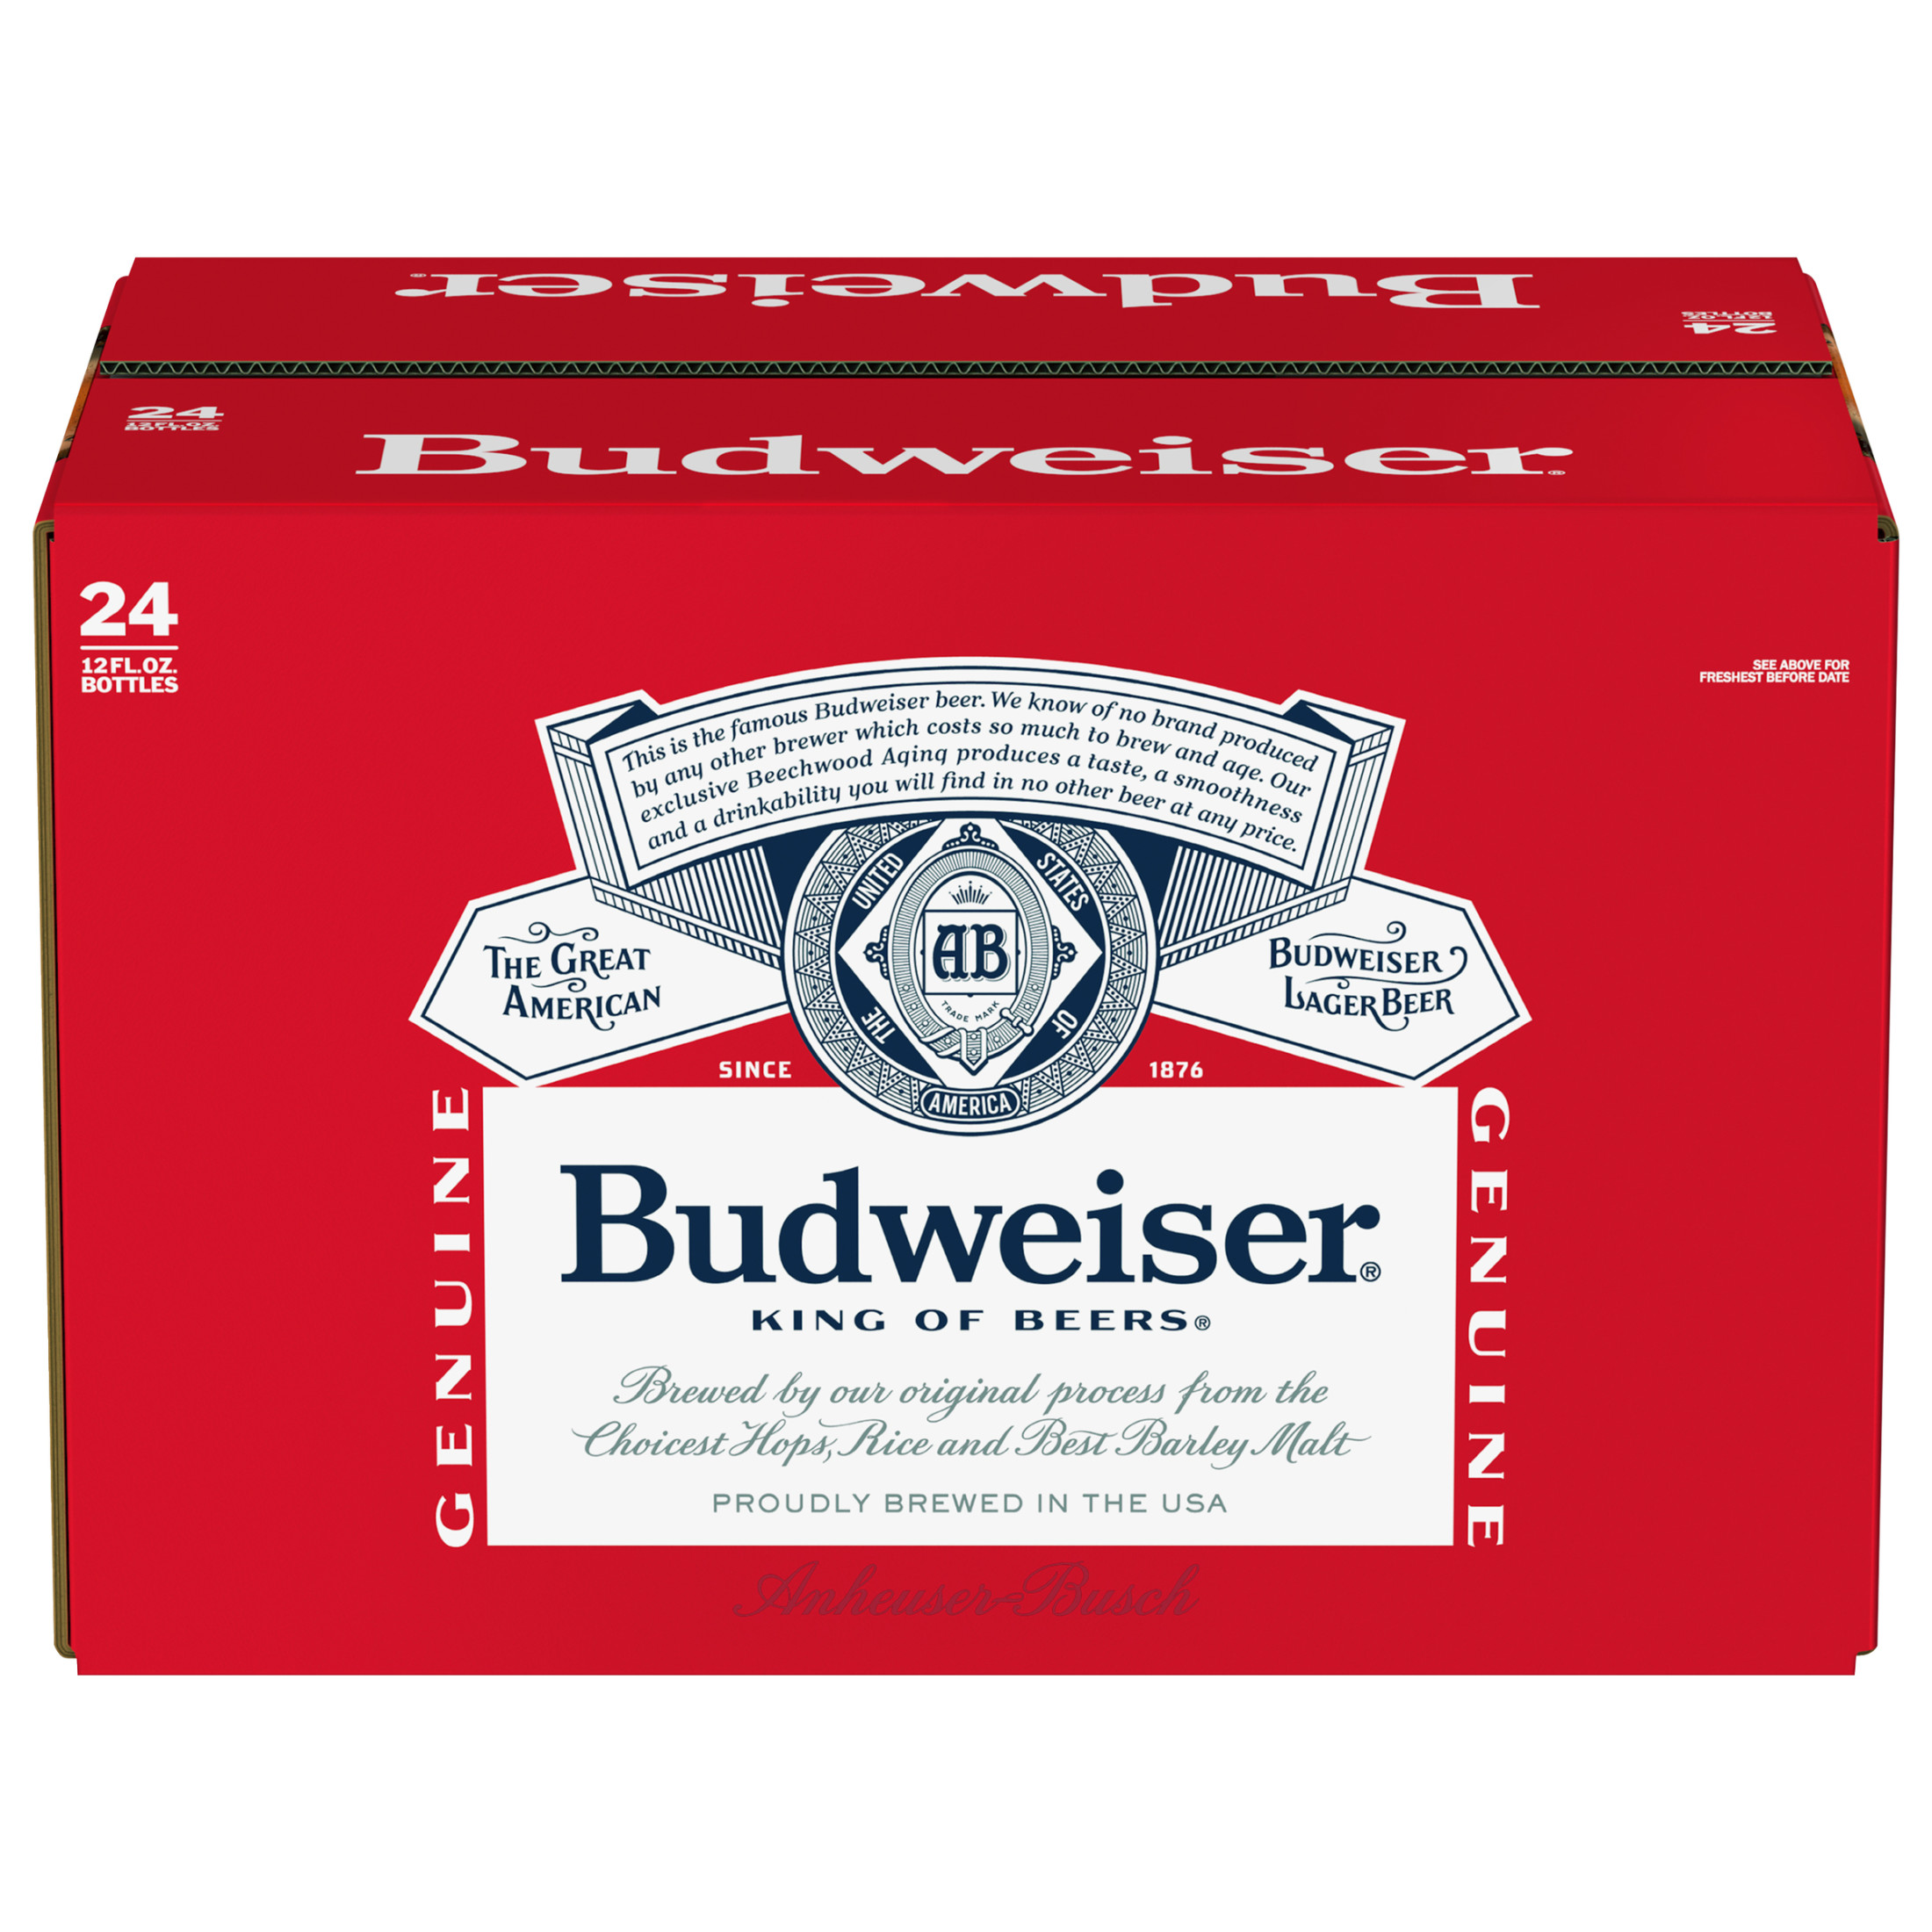 Budweiser Beer, 24 Pack Beer, 12 fl oz Glass Bottles, 5% ABV, Domestic Lager - image 3 of 14